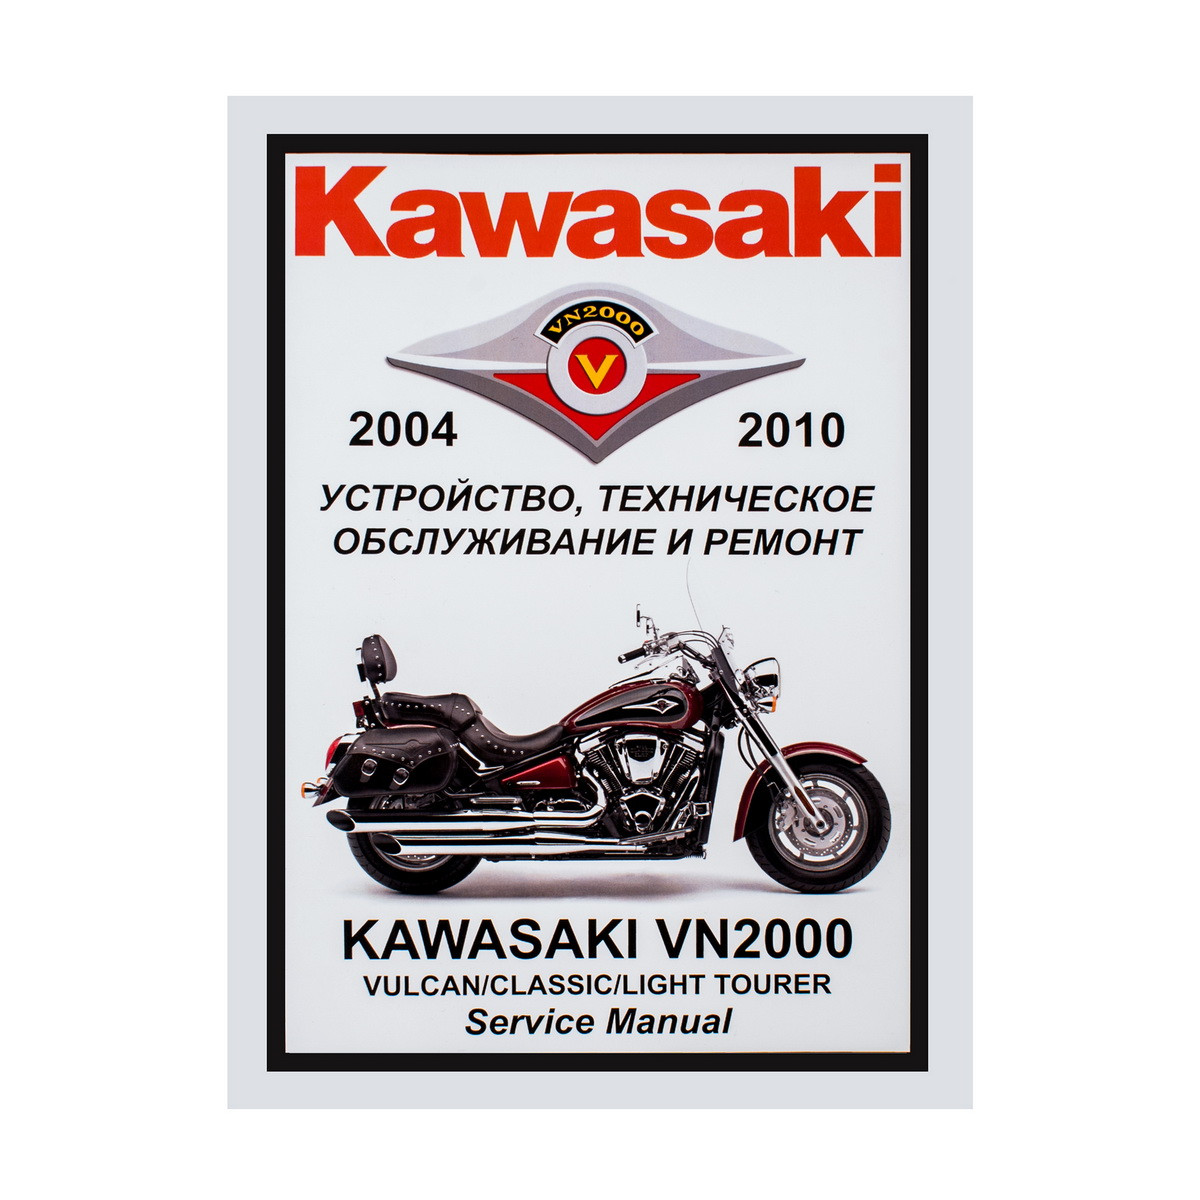 Мотоцикл kawasaki vn 2000 vulcan: обзор, технические характеристики